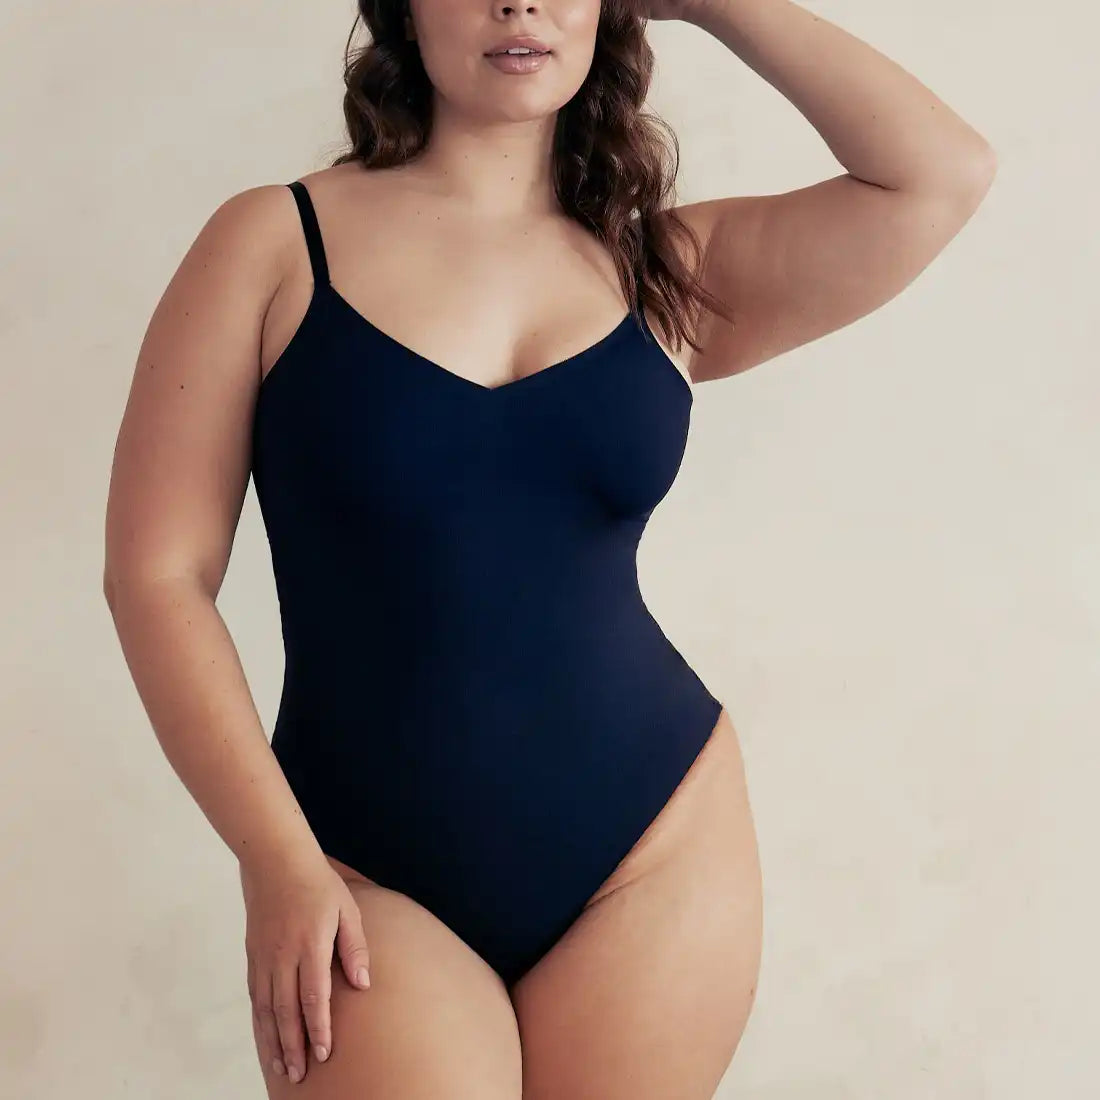 Snatched Bodysuit - Body Shaper – Admire me